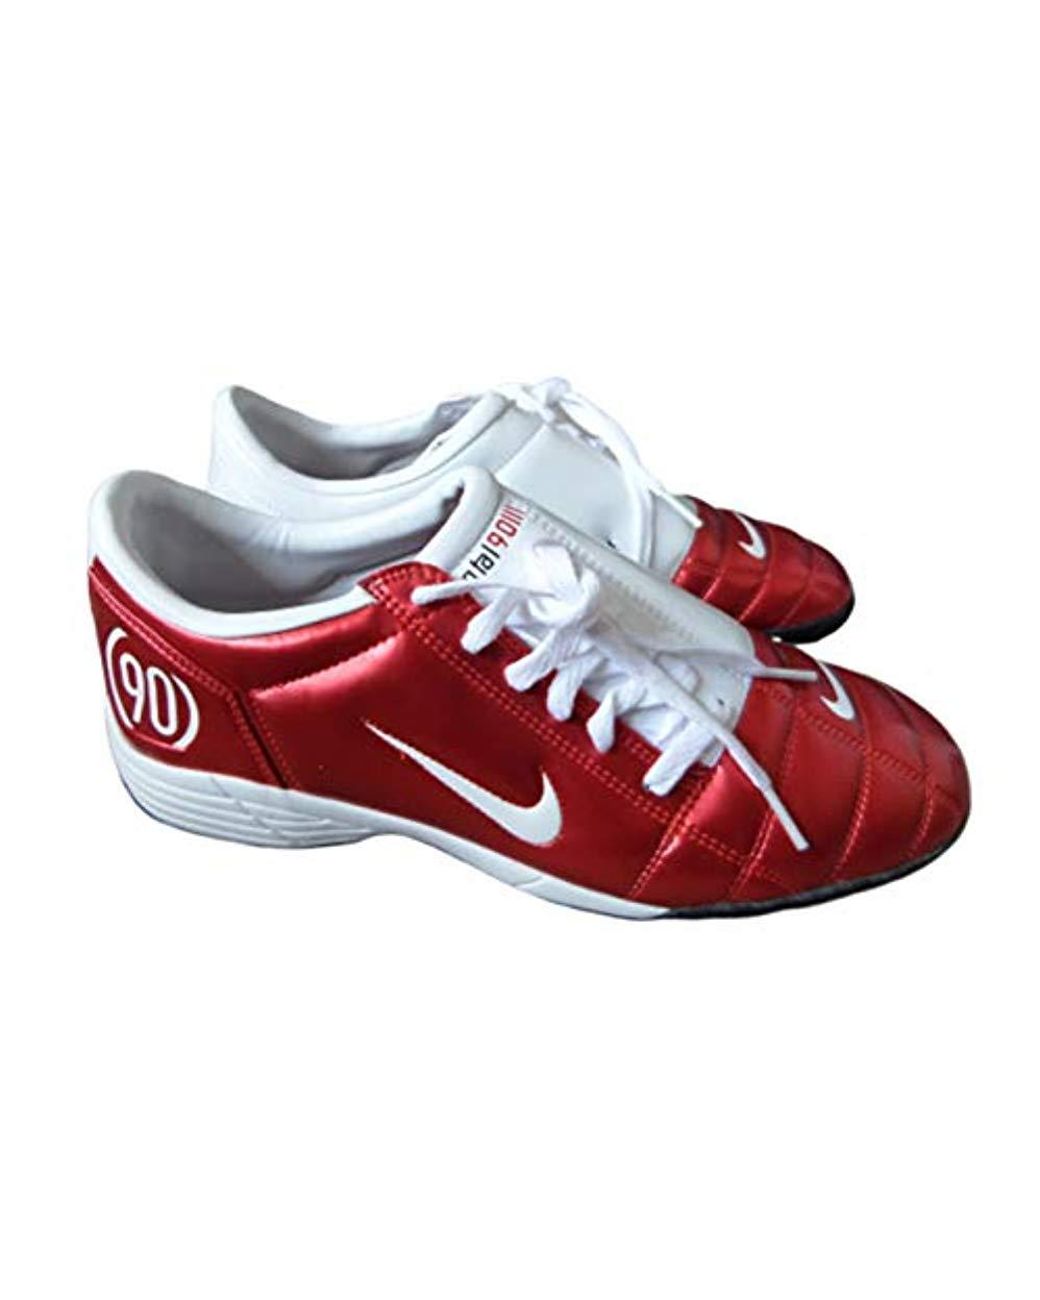 Nike Total 90 Iii Tf Plus Astro Turf Football Trainers Original 2005 Model In Box Soccer Shoes Uk 10.5, Eur 45.5 in Red Men | UK